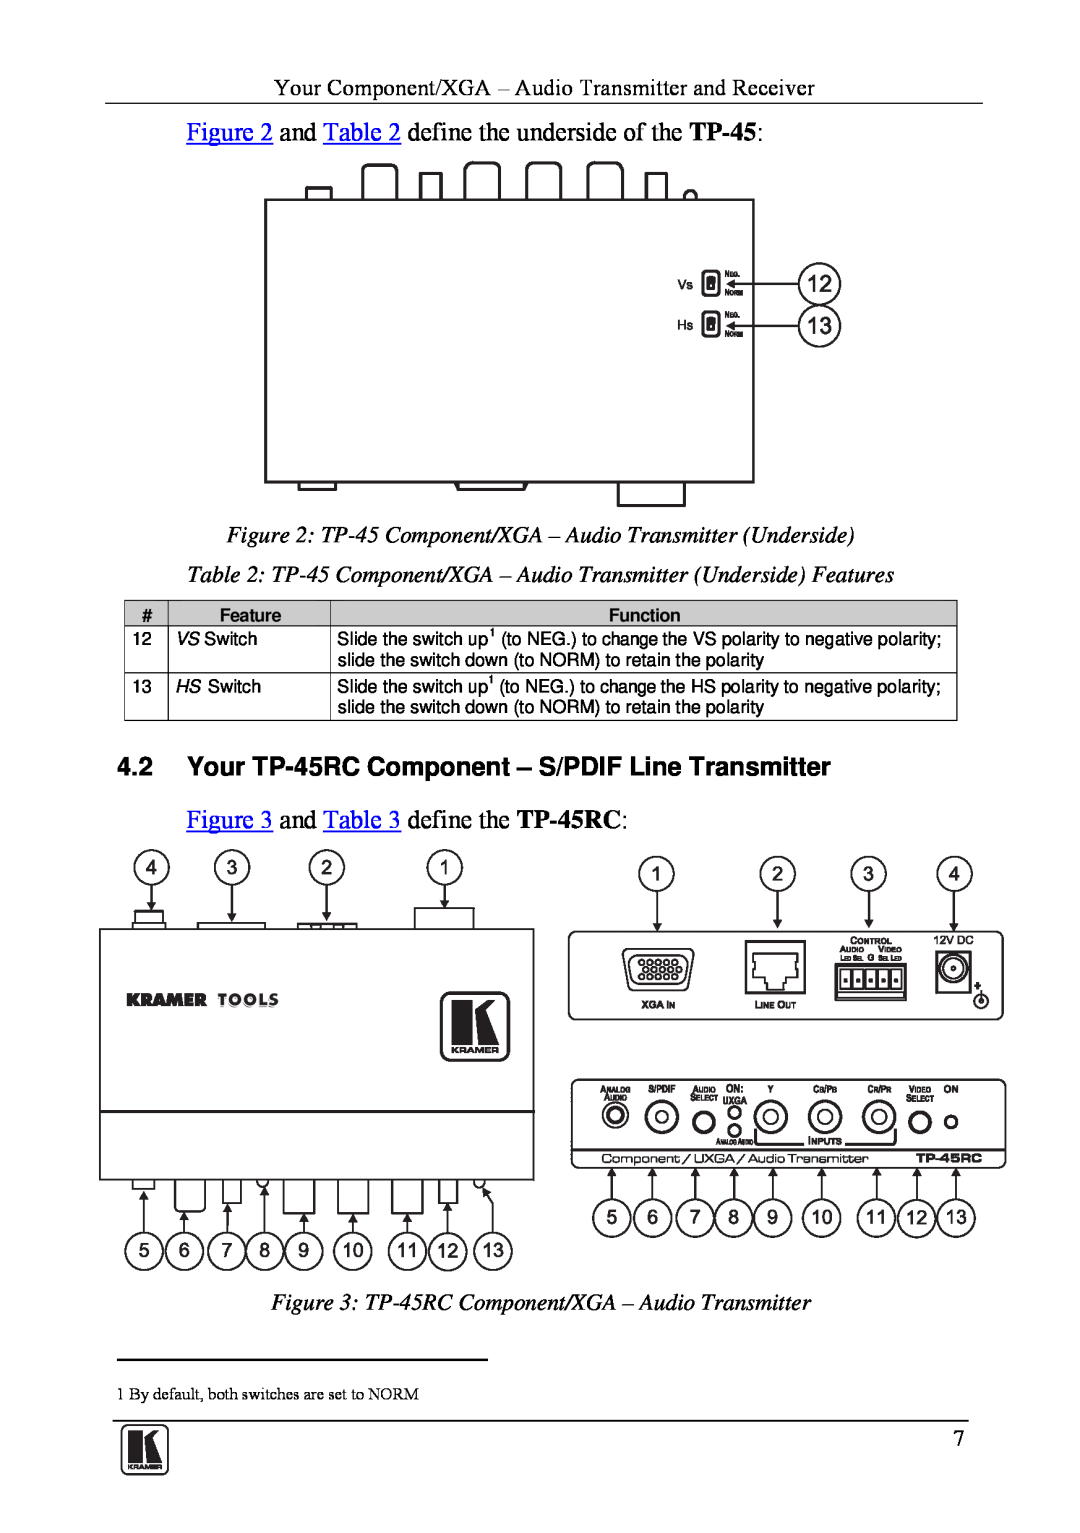 Kramer Electronics Your TP-45RC Component - S/PDIF Line Transmitter, TP-45 Component/XGA - Audio Transmitter Underside 